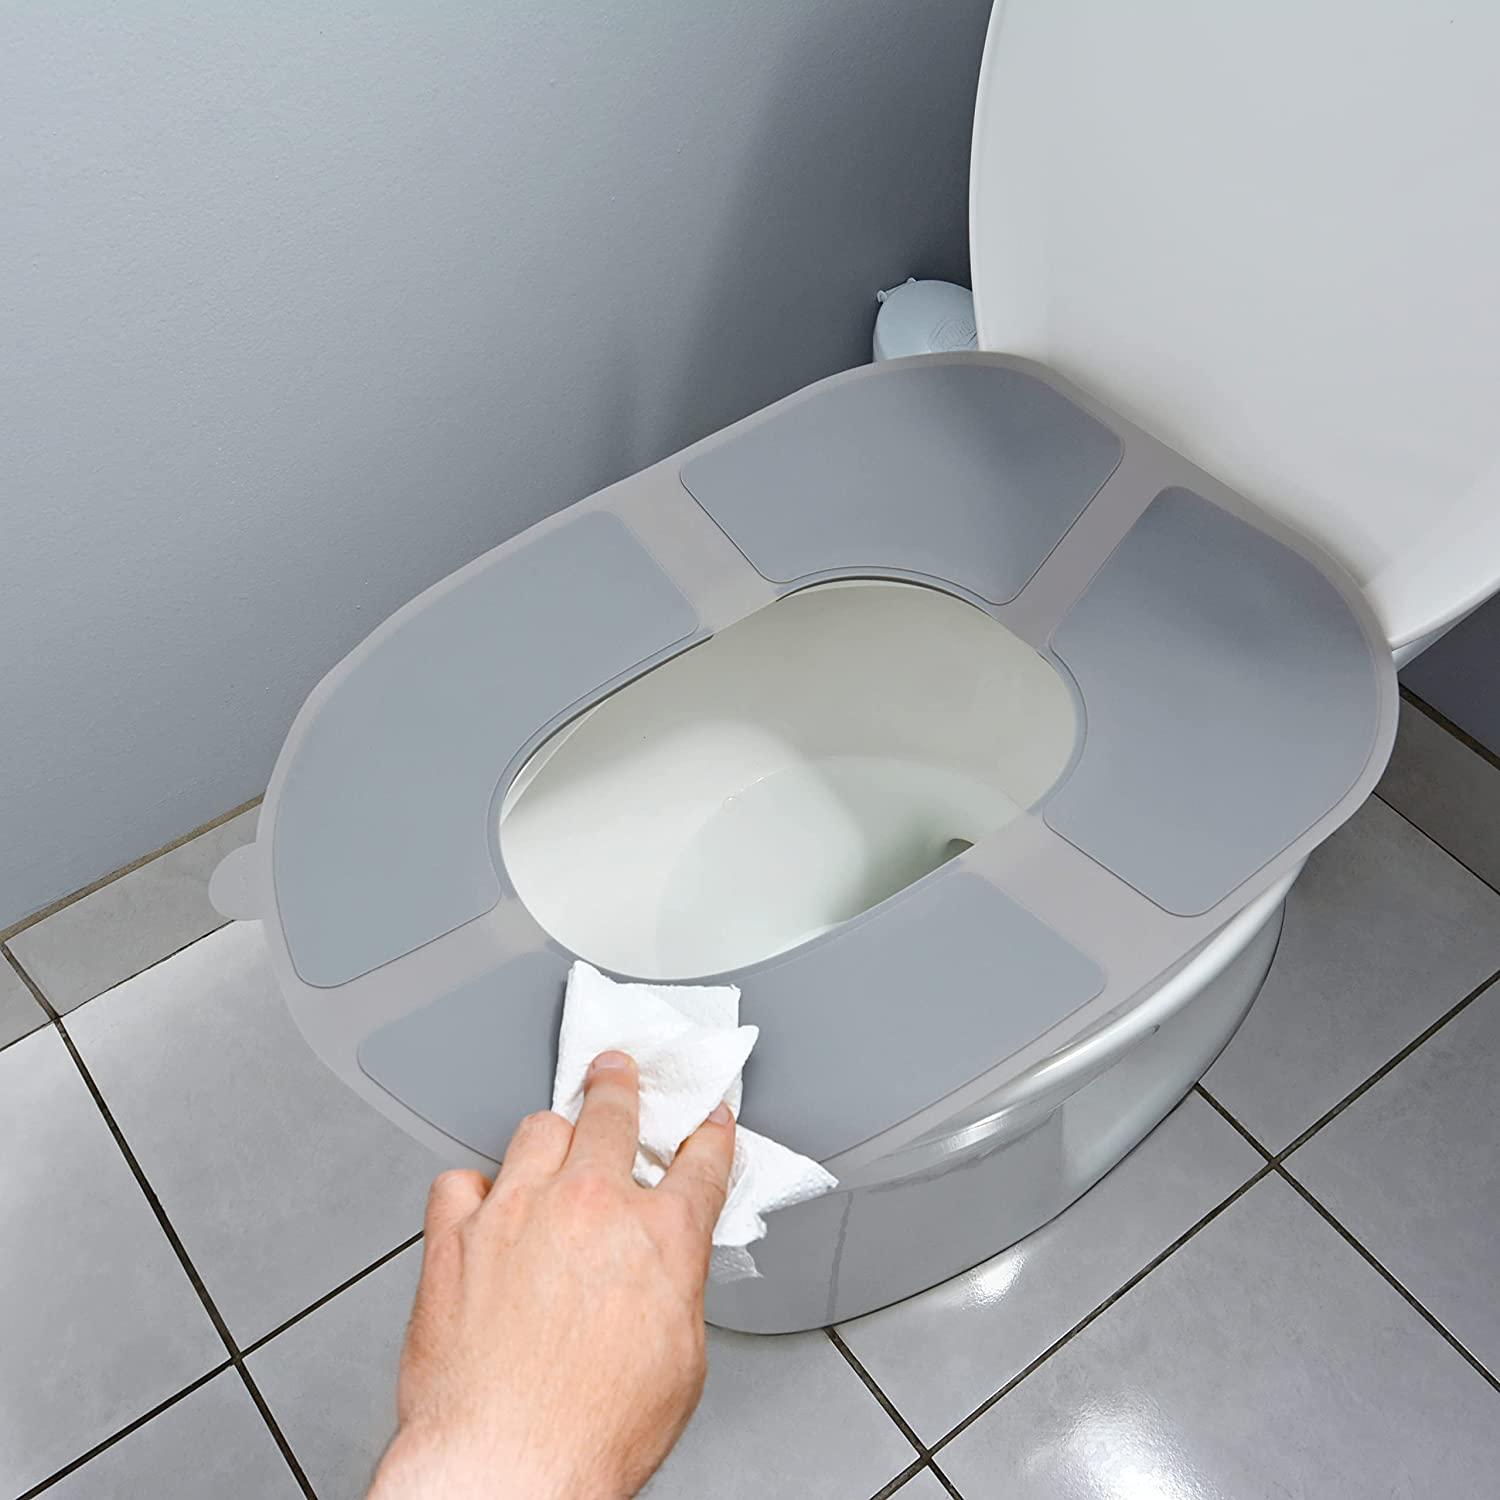 Reusable Silicone Toilet Seat Cover, Waterproof, Non-Slip, Toilet